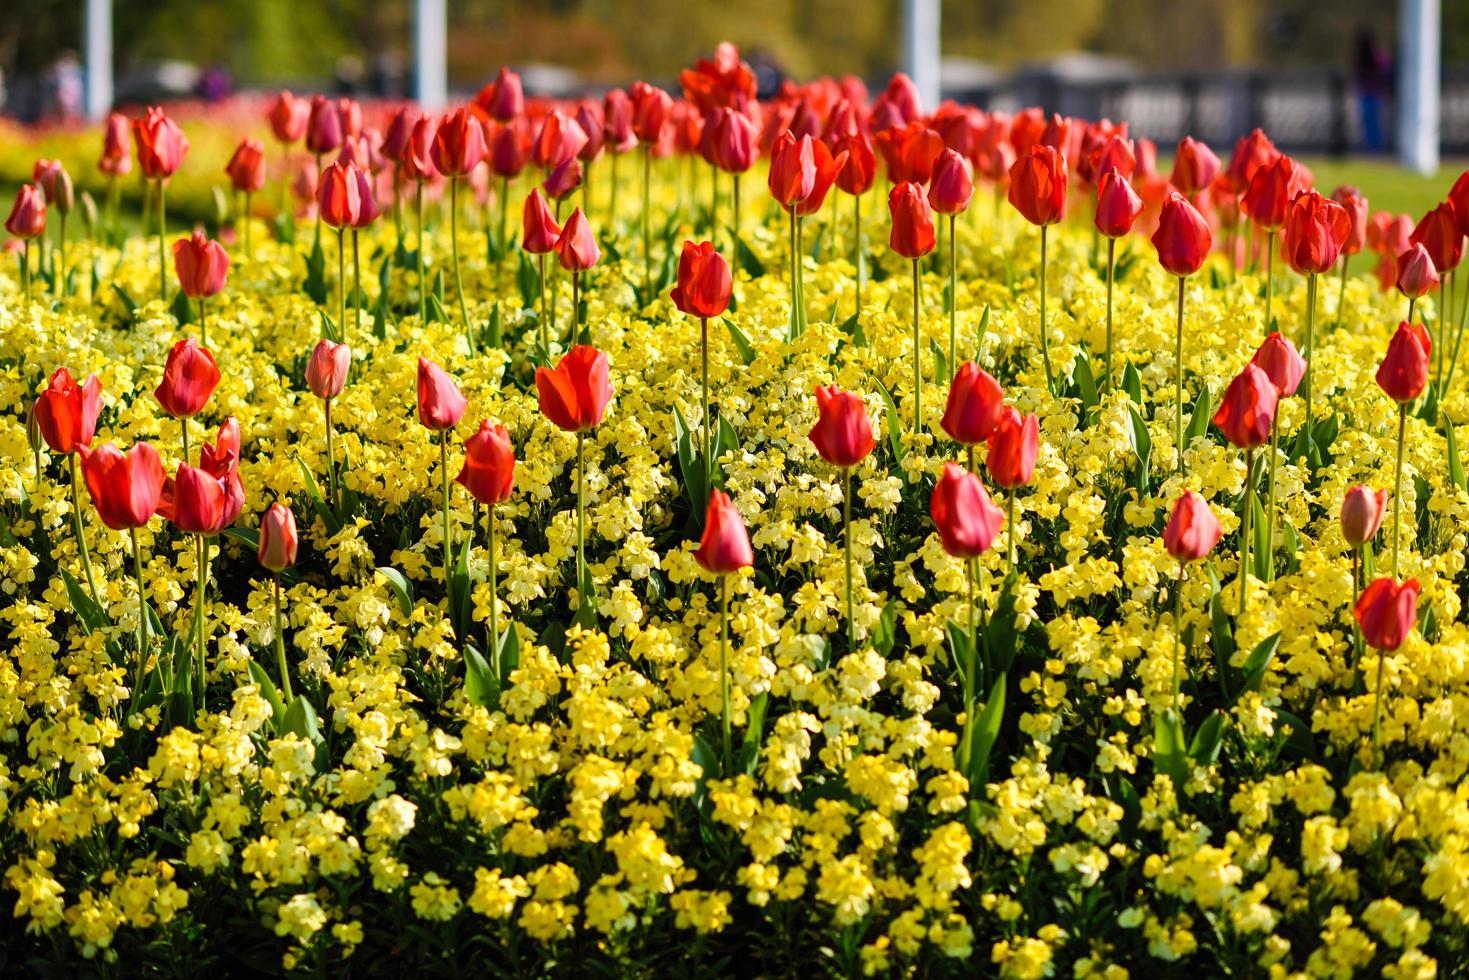 Red tulips near Buckingham Palace in London photo